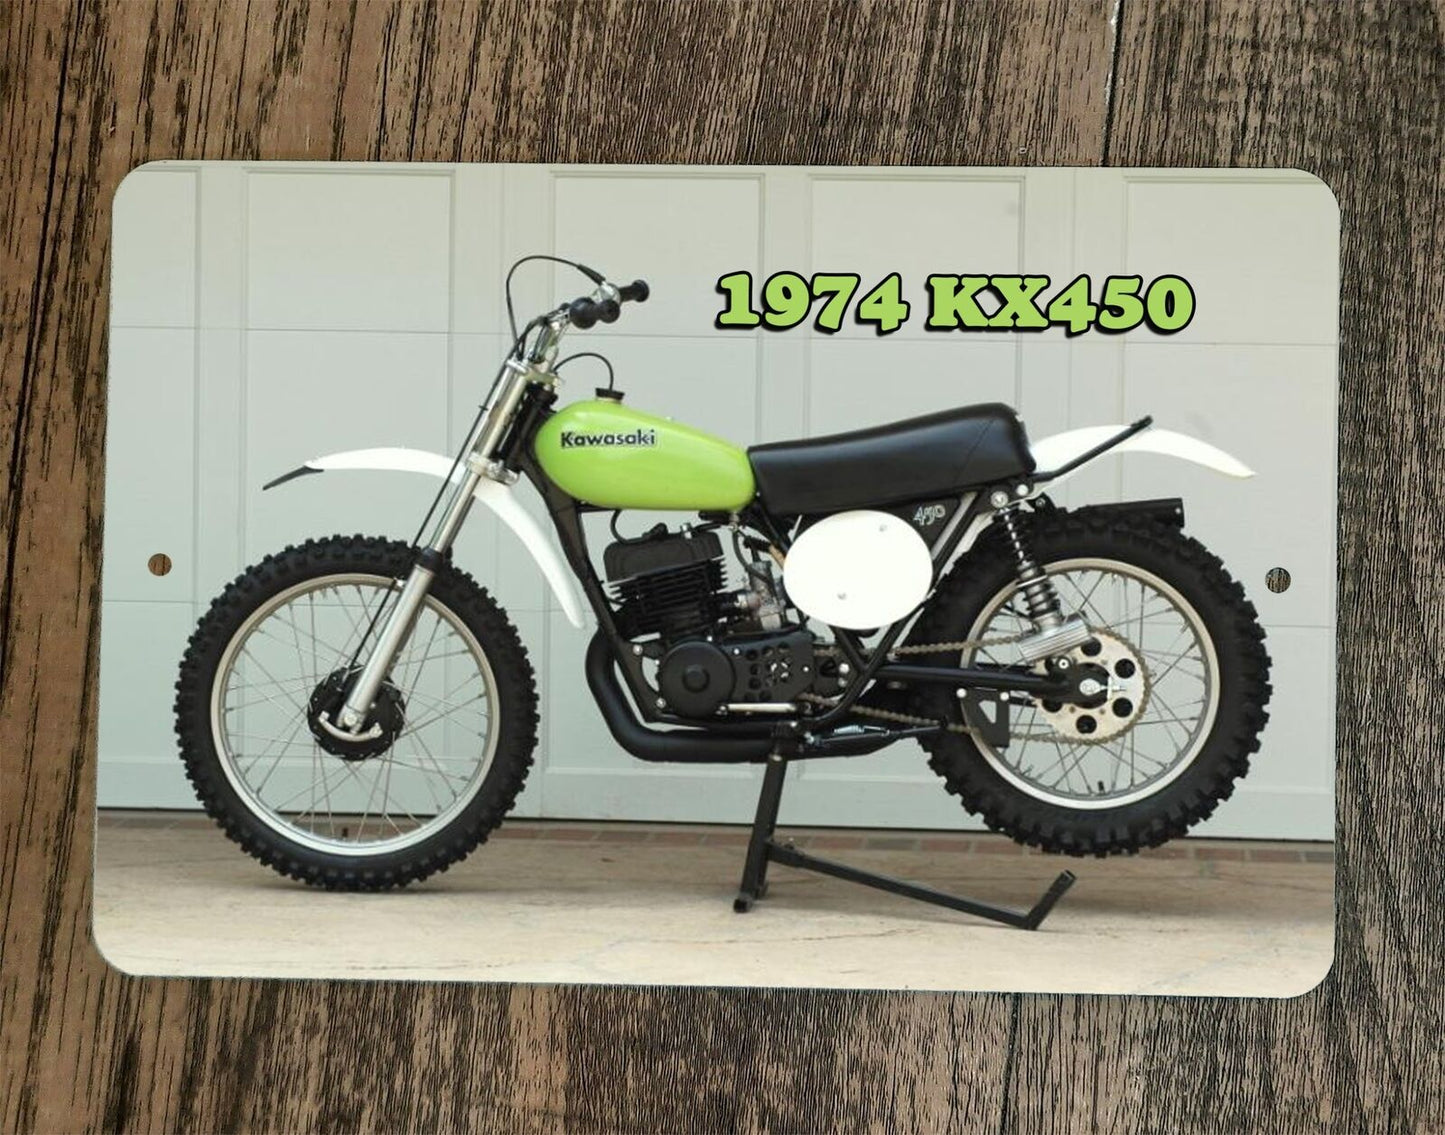 1974 Kawasaki KX450 Motorcross Dirt Bike Motorcycle Pic 8x12 Metal Wall Sign